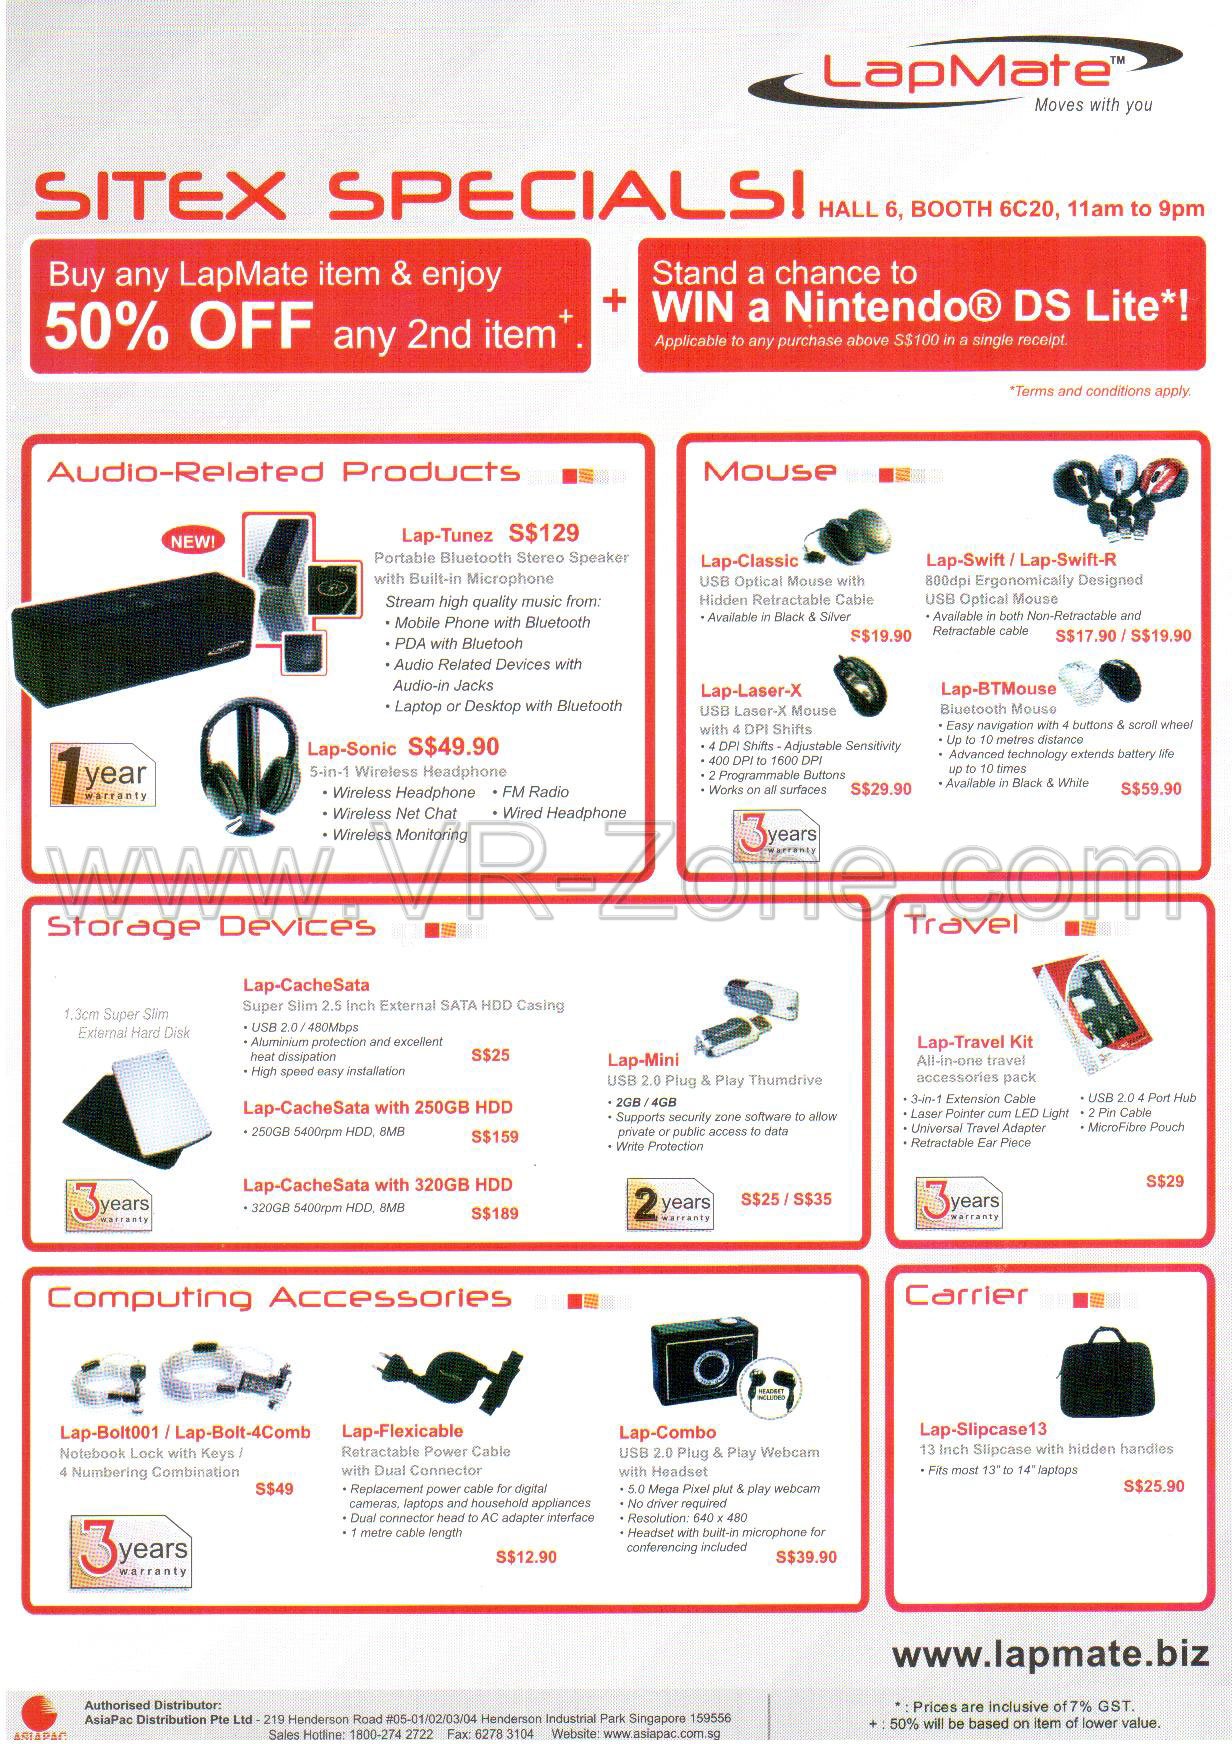 Sitex 2008 price list image brochure of Lapmate 1